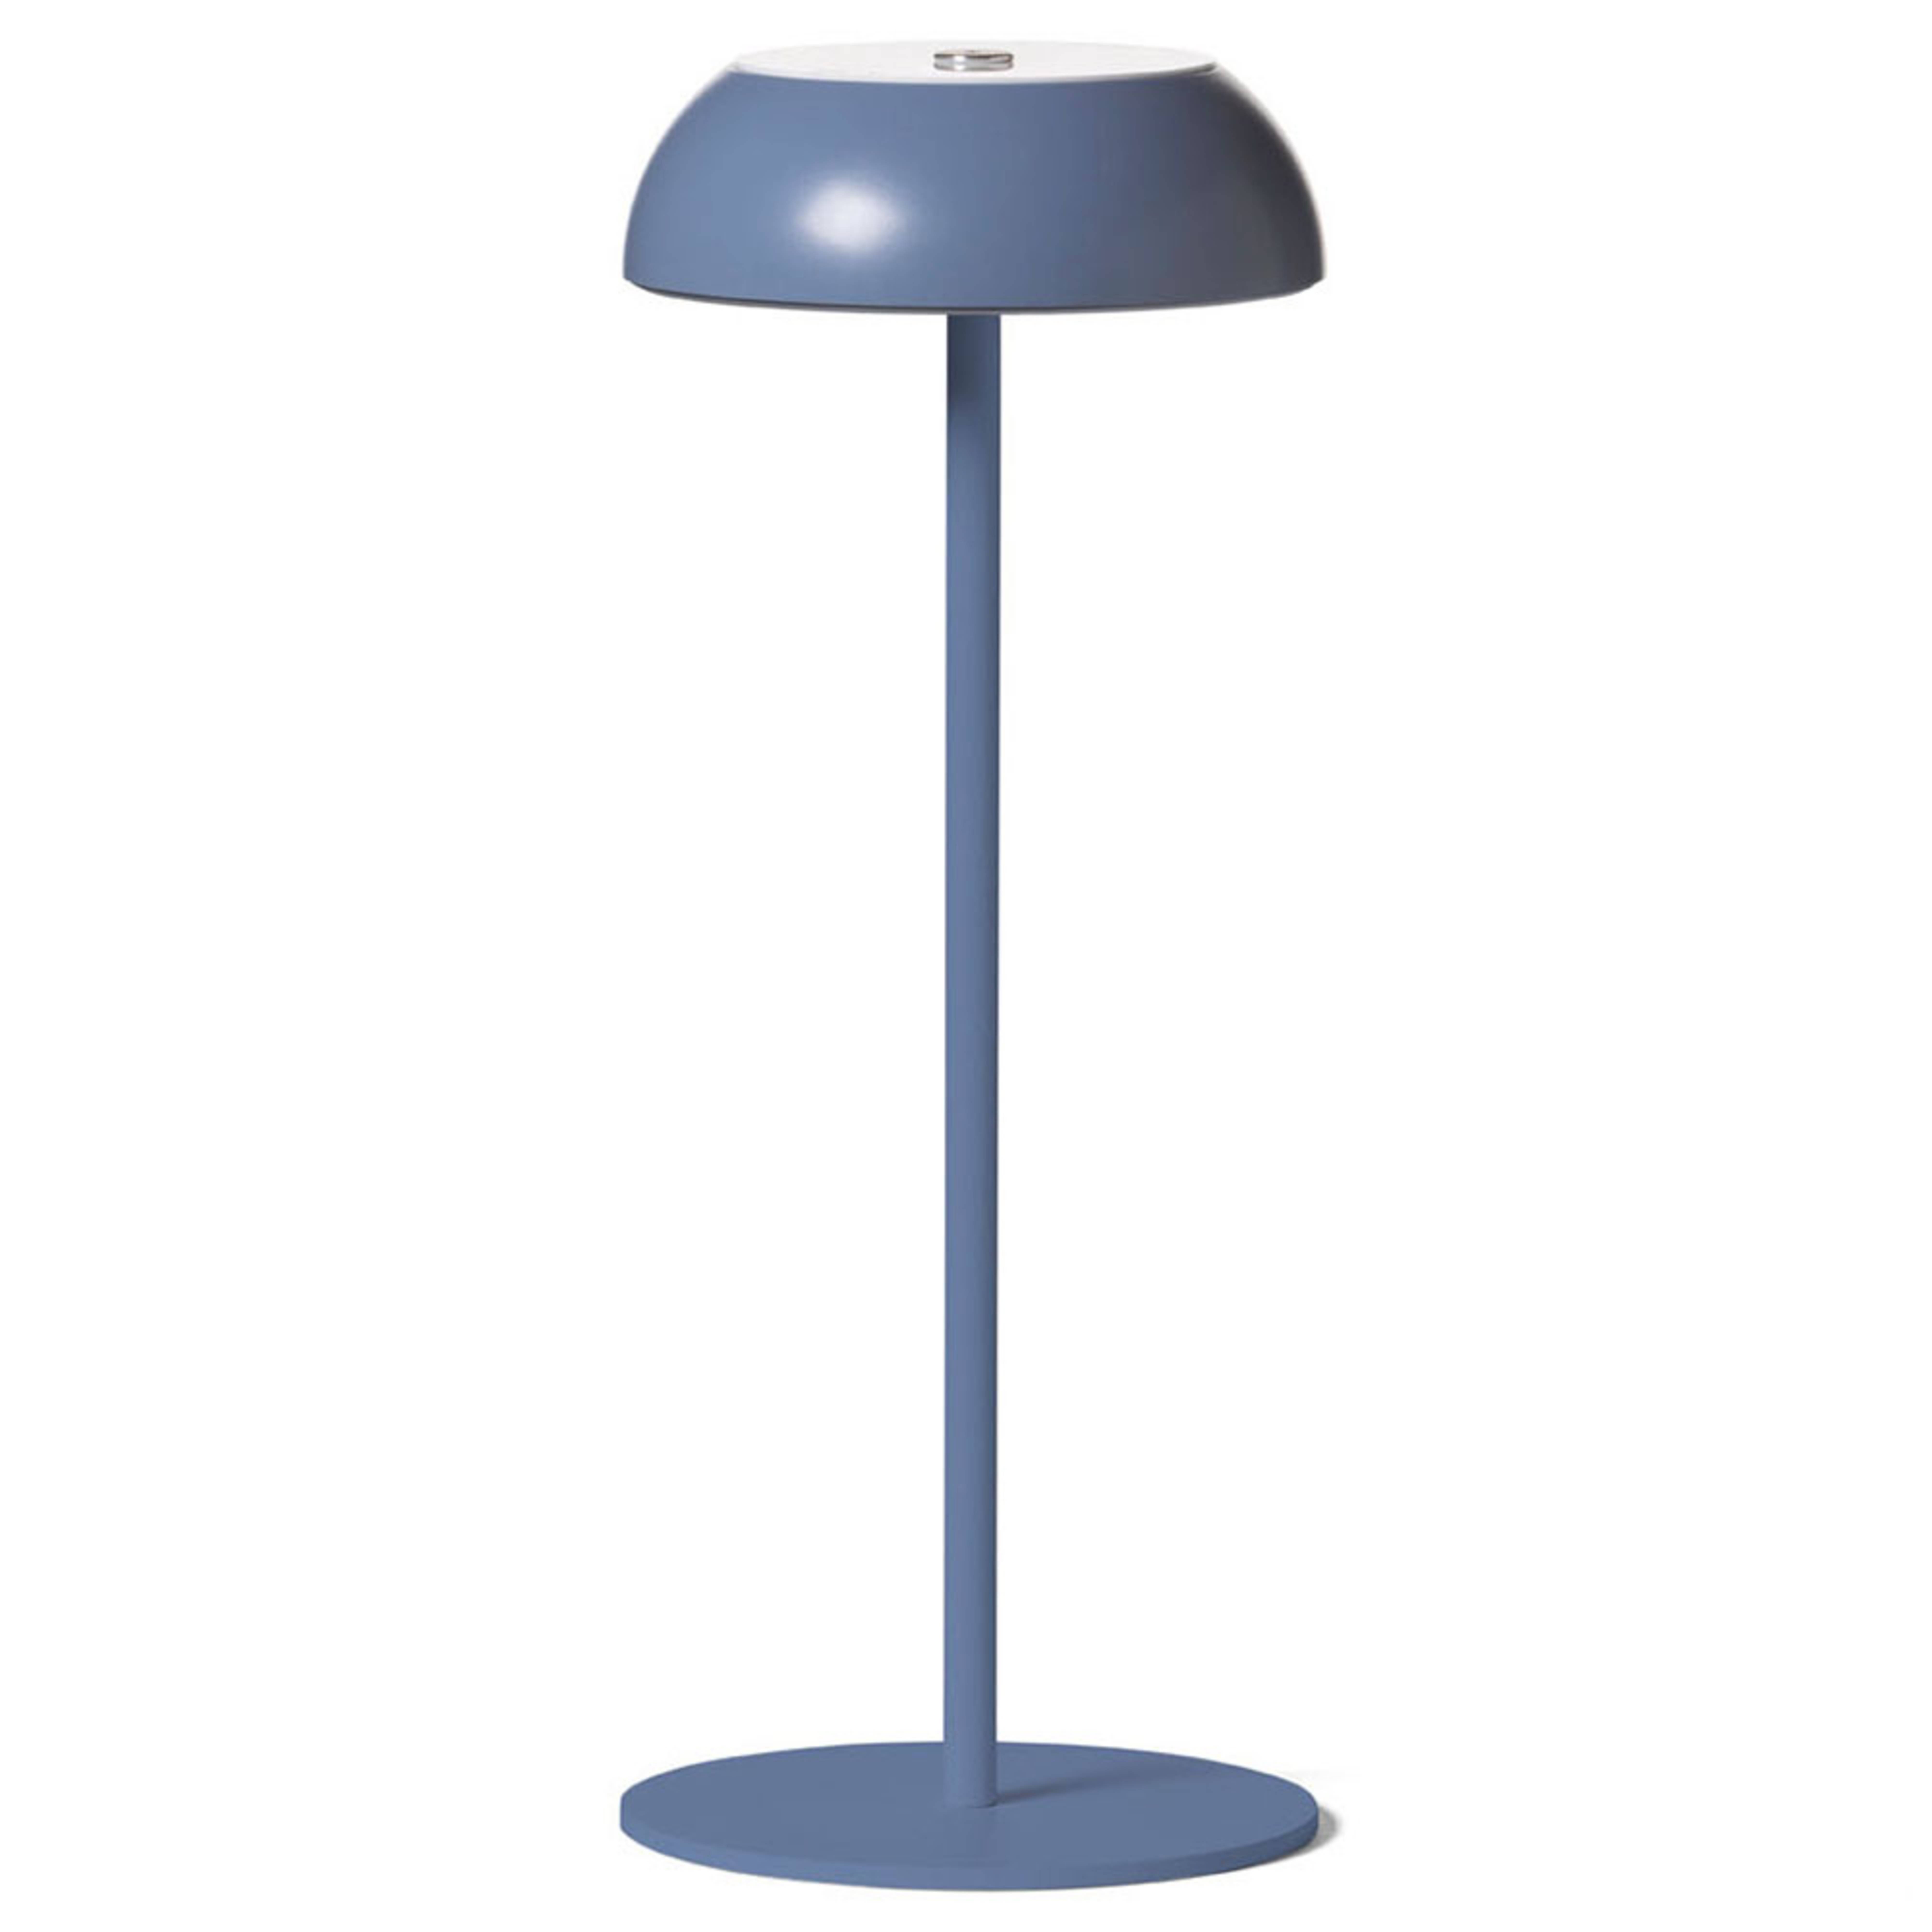 Axolight Float lampe à poser designer LED, bleue